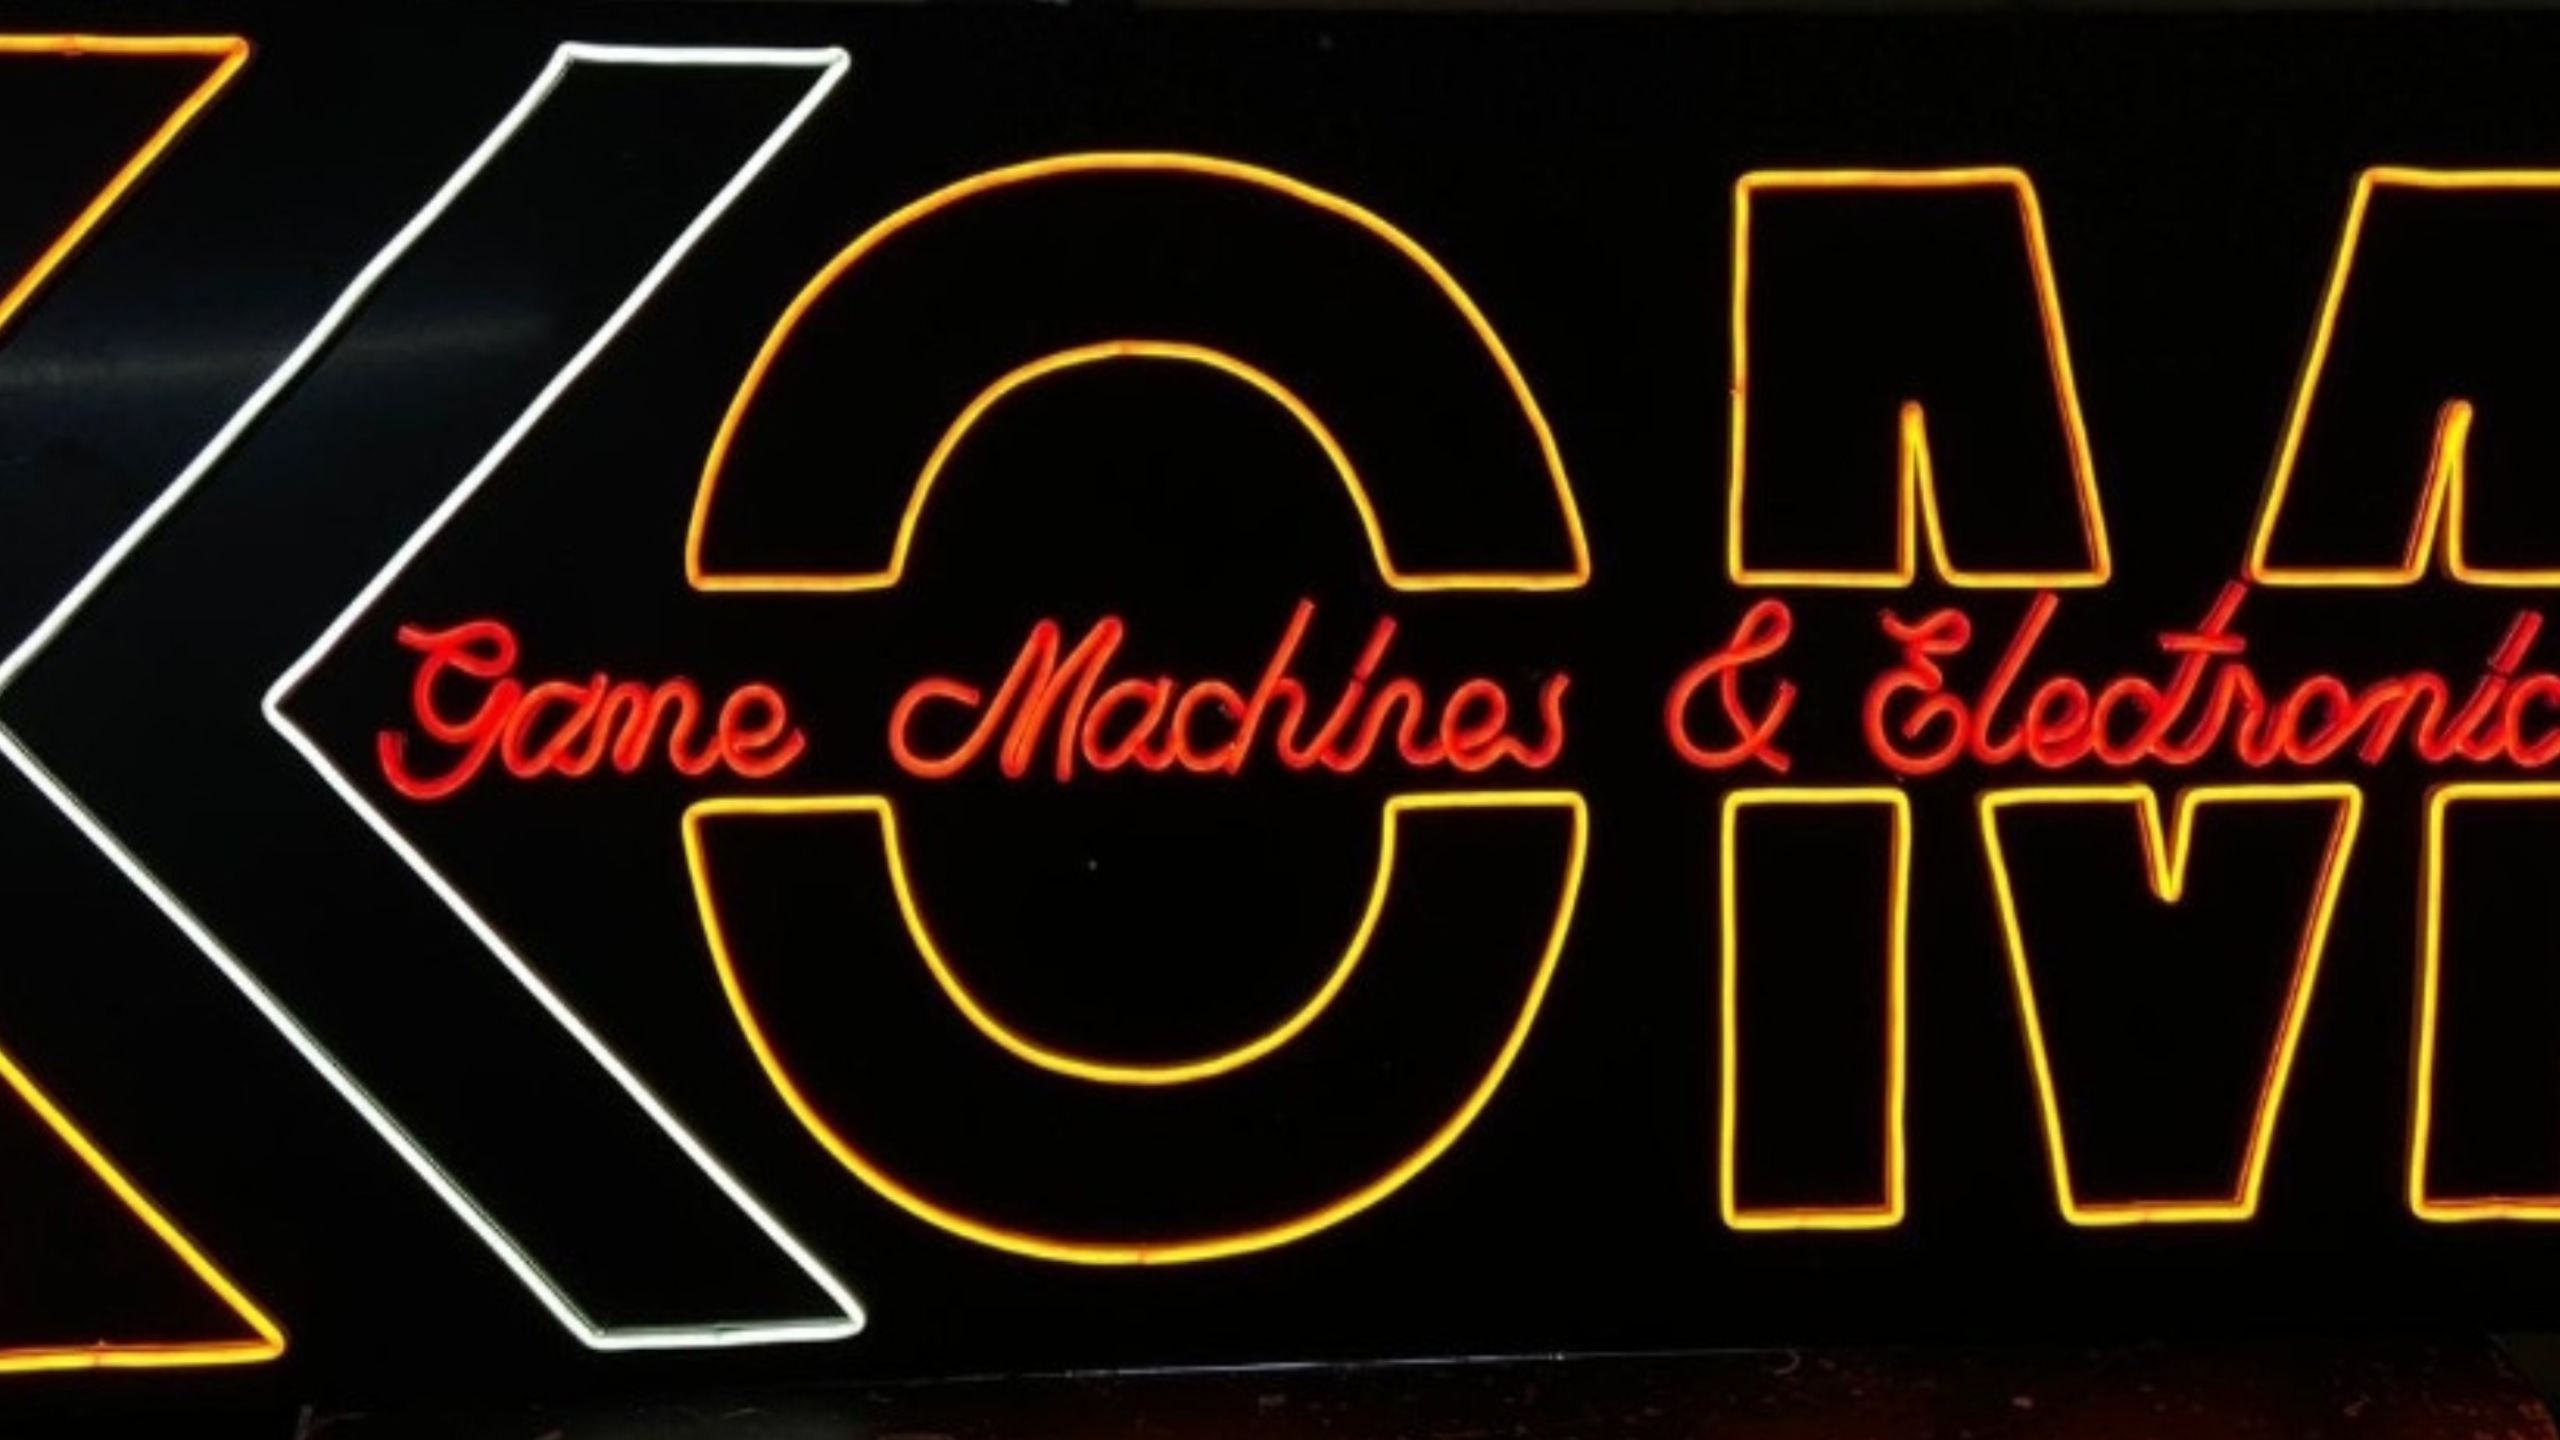 KOM Games & Electronics